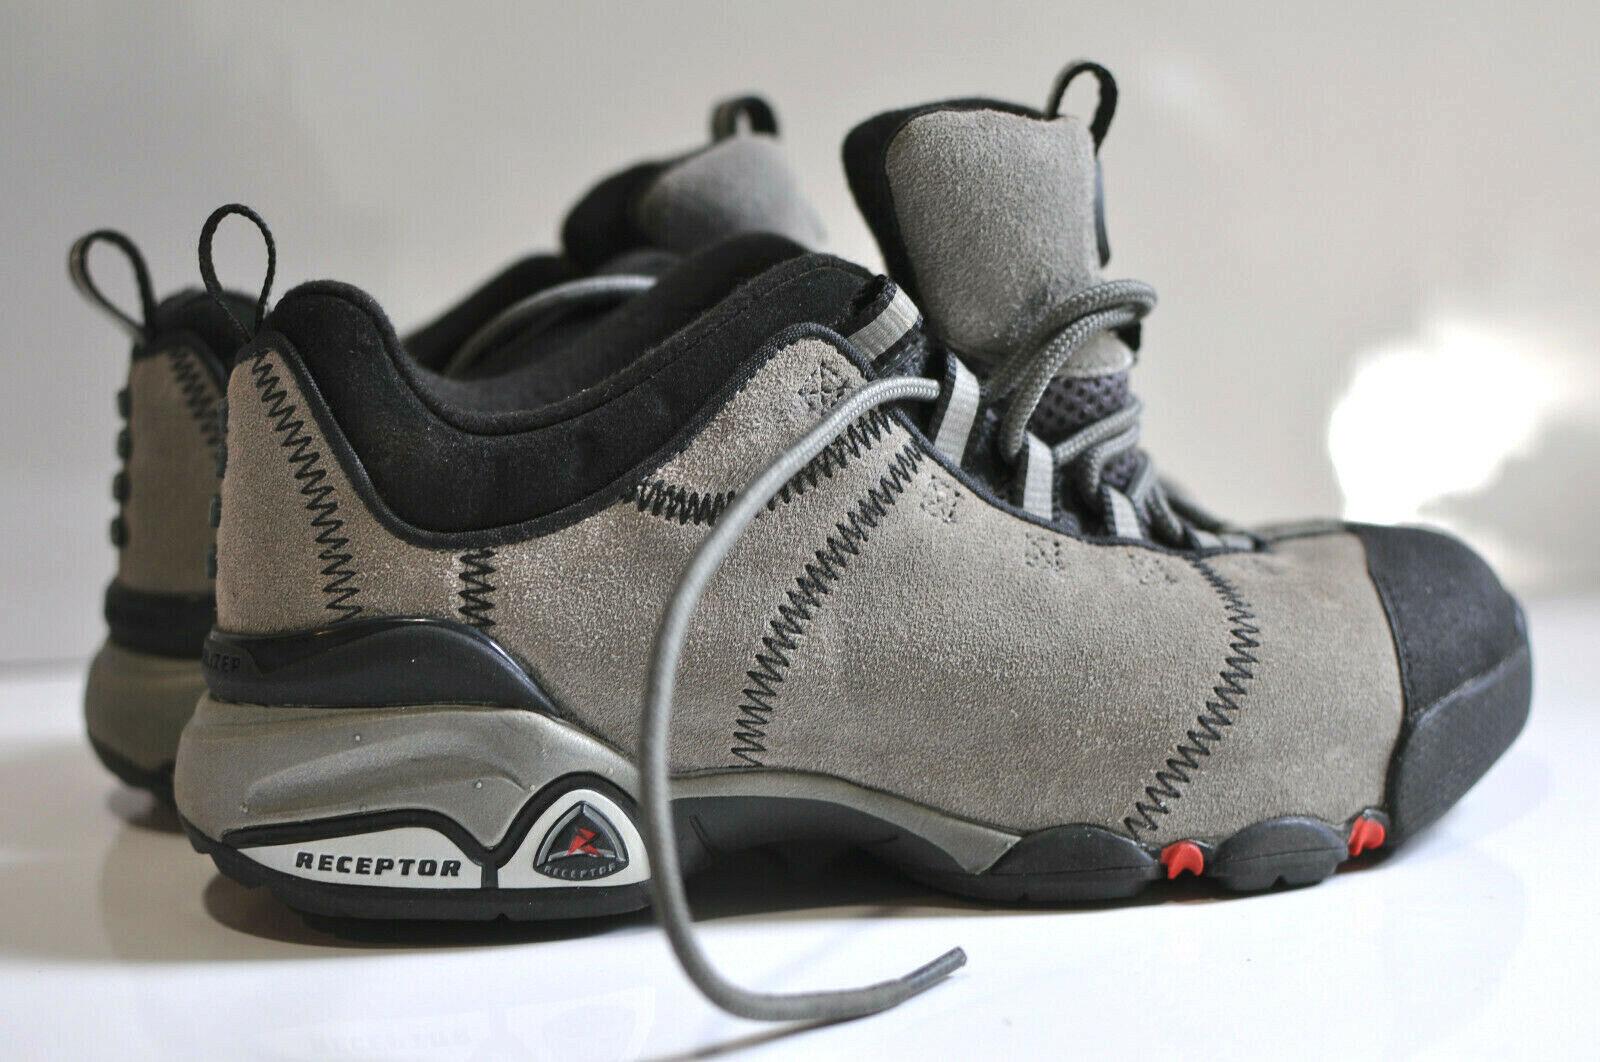 Ecco Womens Receptor grey leather trail hiking shoes size EU 37 6-6.5 Lage prijs, speciale prijs